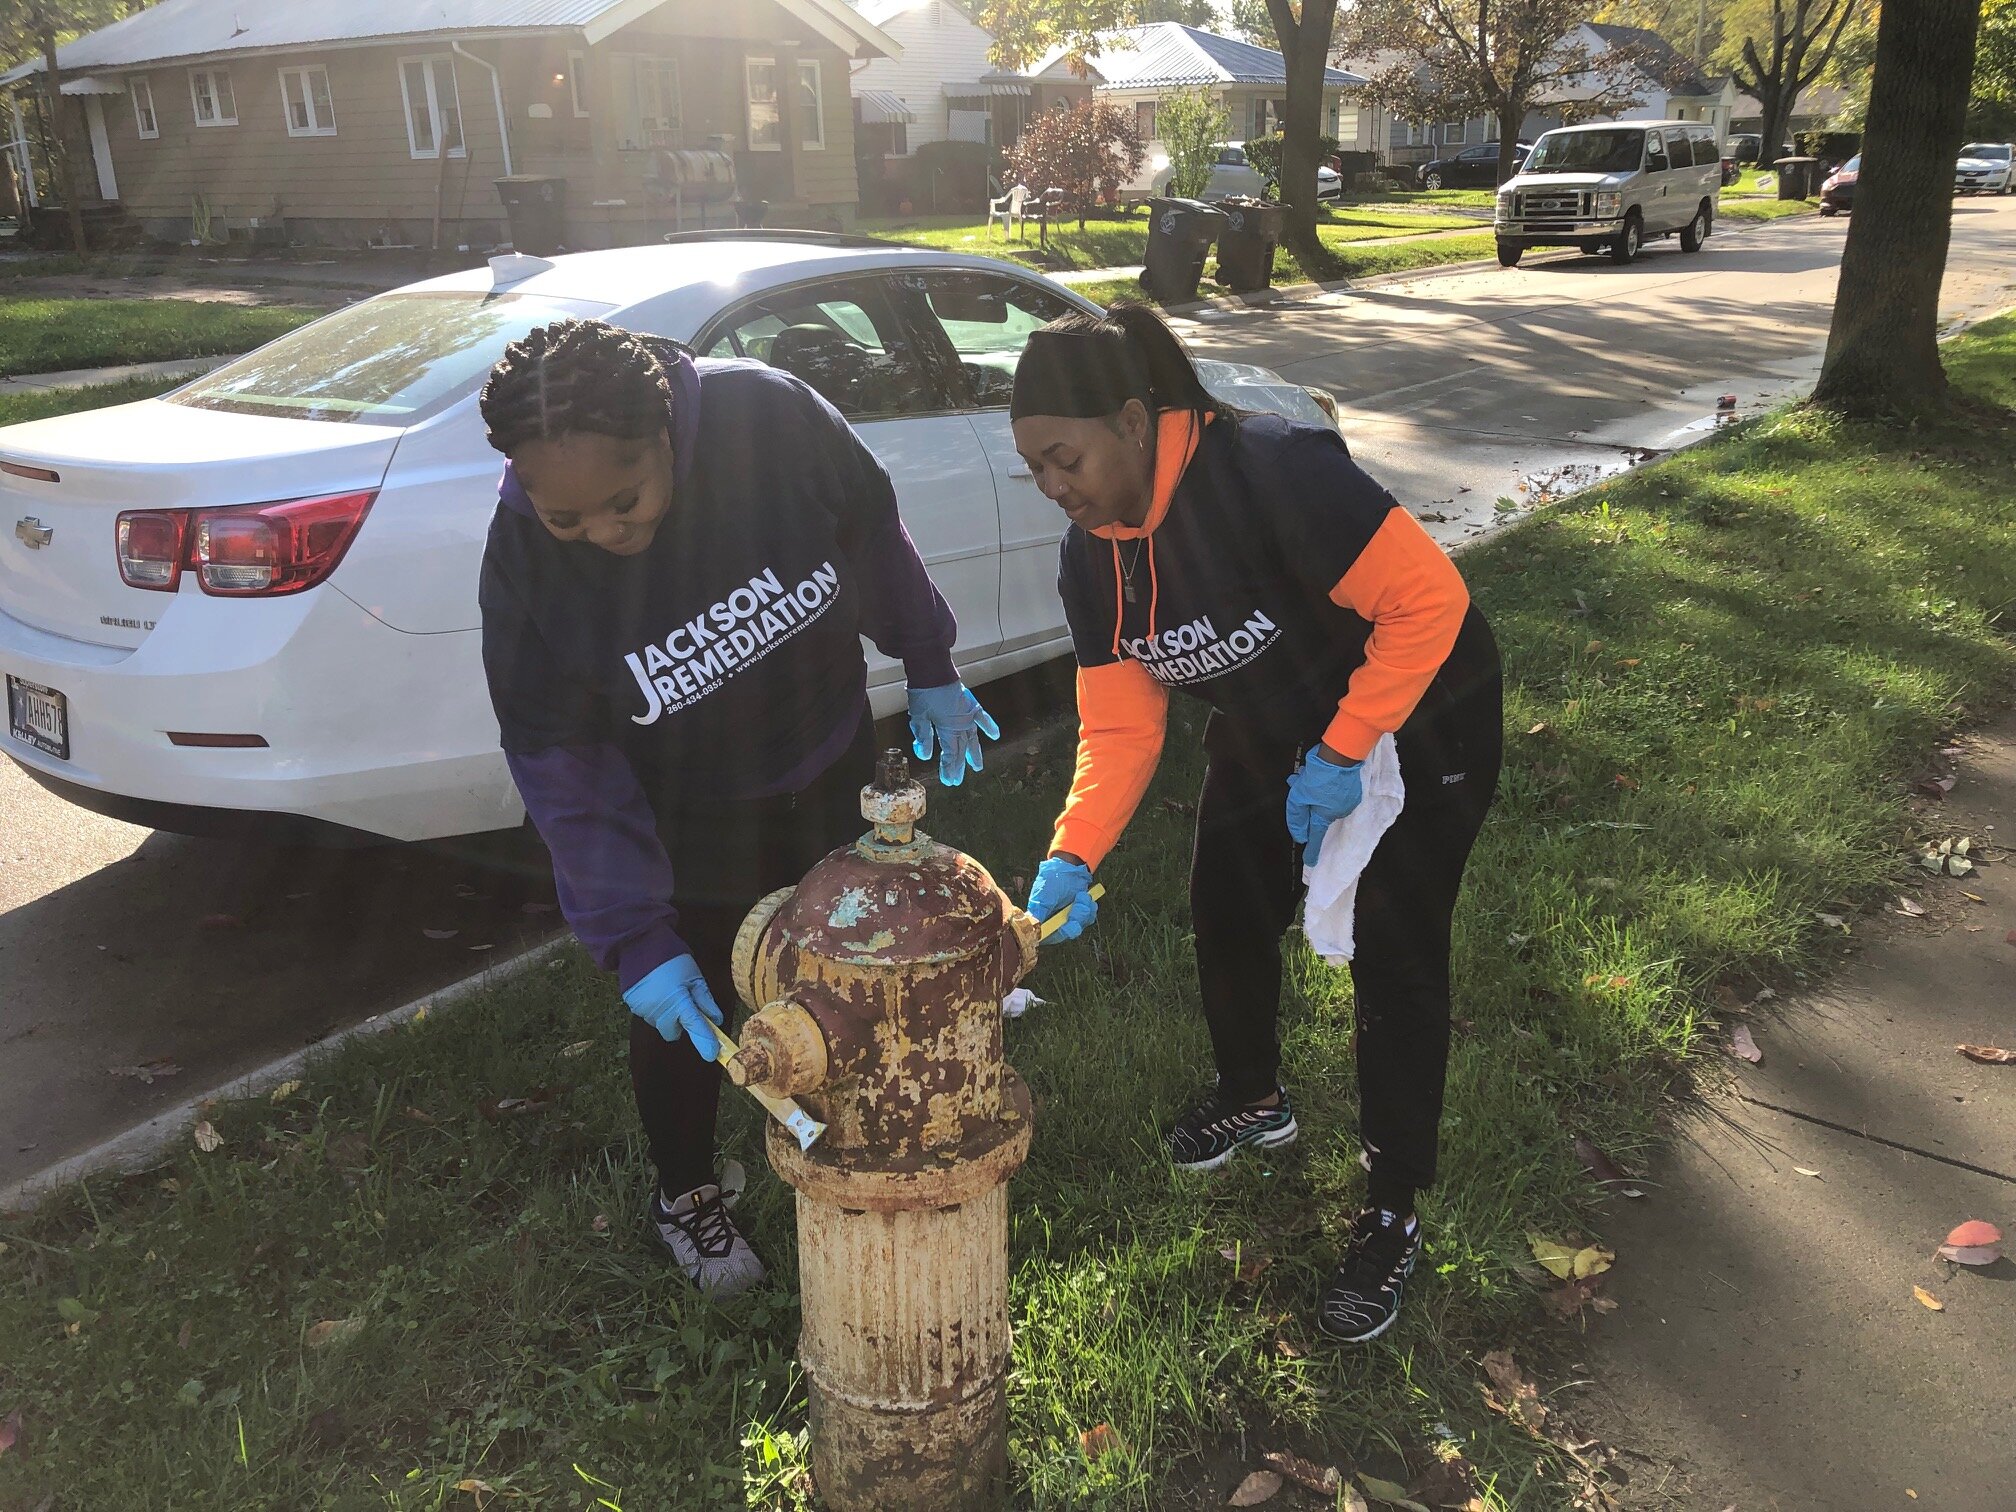 NeighborLink volunteers collaborate on service projects in Fort Wayne neighborhoods, like painting fire hydrants.